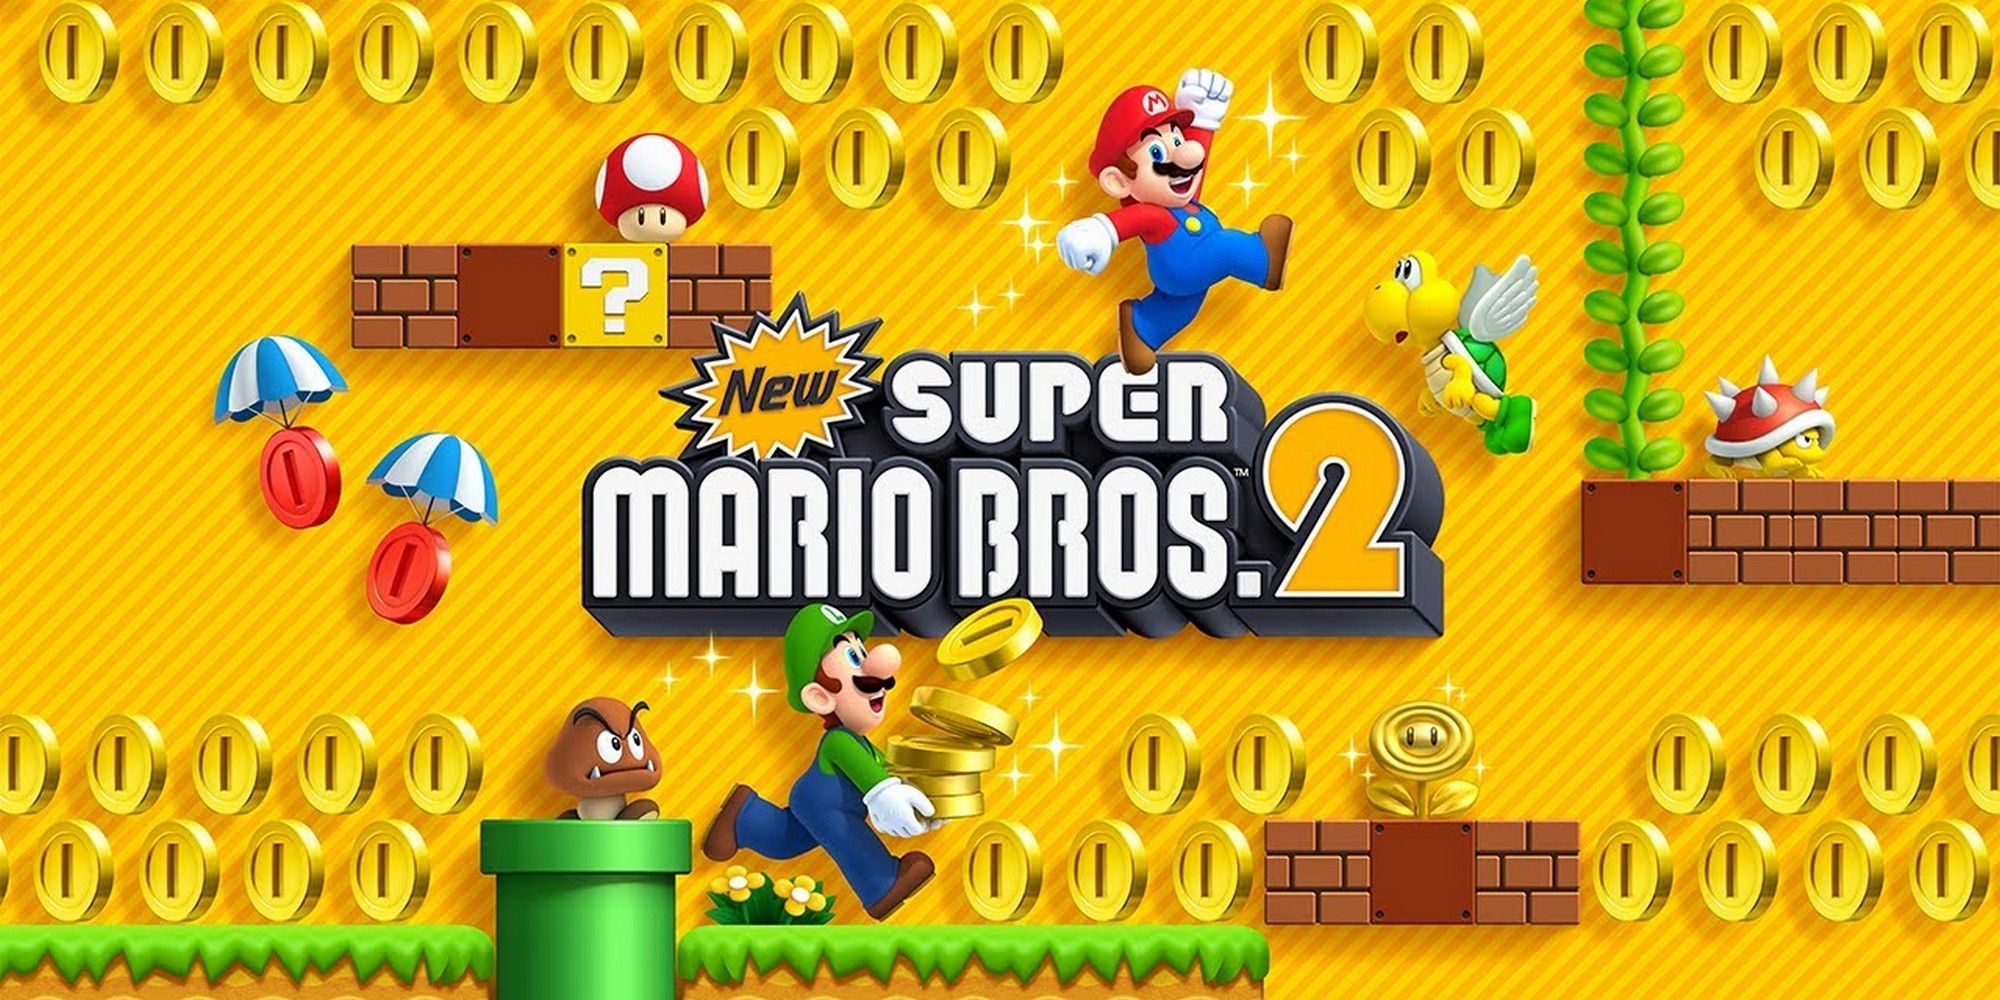 New Super Mario Bros. 2 Promo Art Featuring Mario, Luigi and a truckload of coins